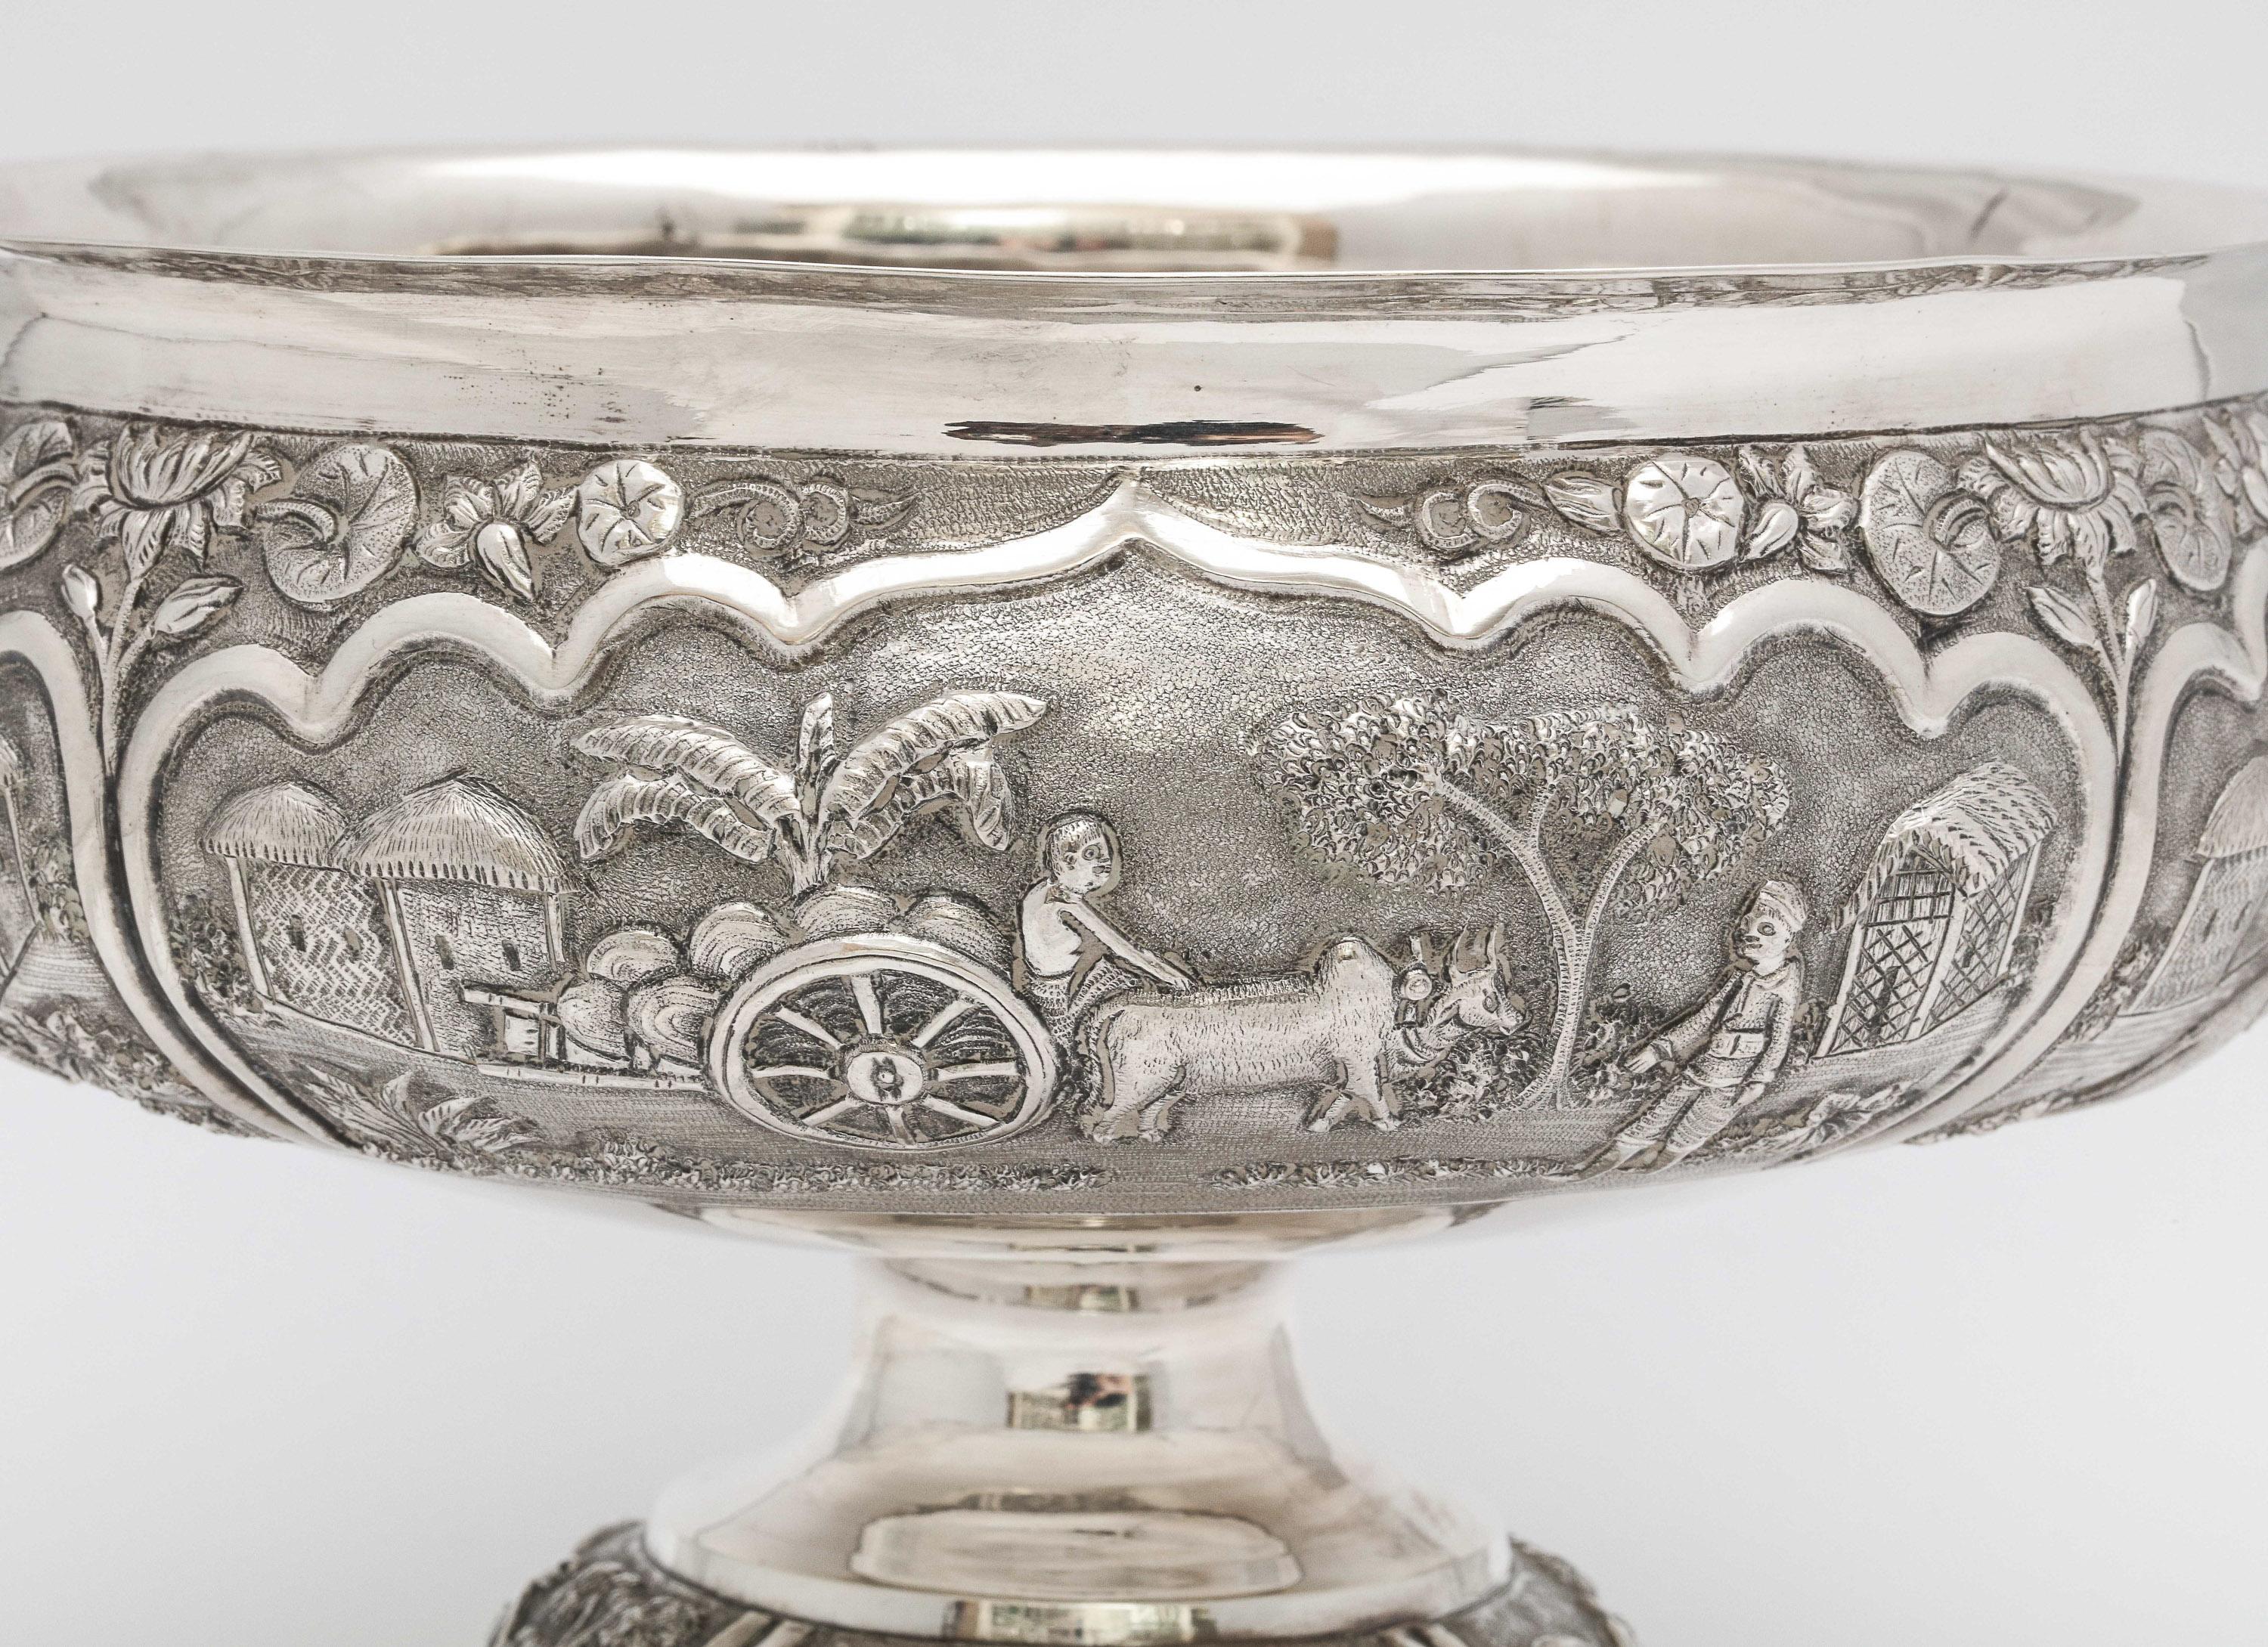 Late 19th Century Burmese/Myanmar Silver Pedestal-Based Bowl 1